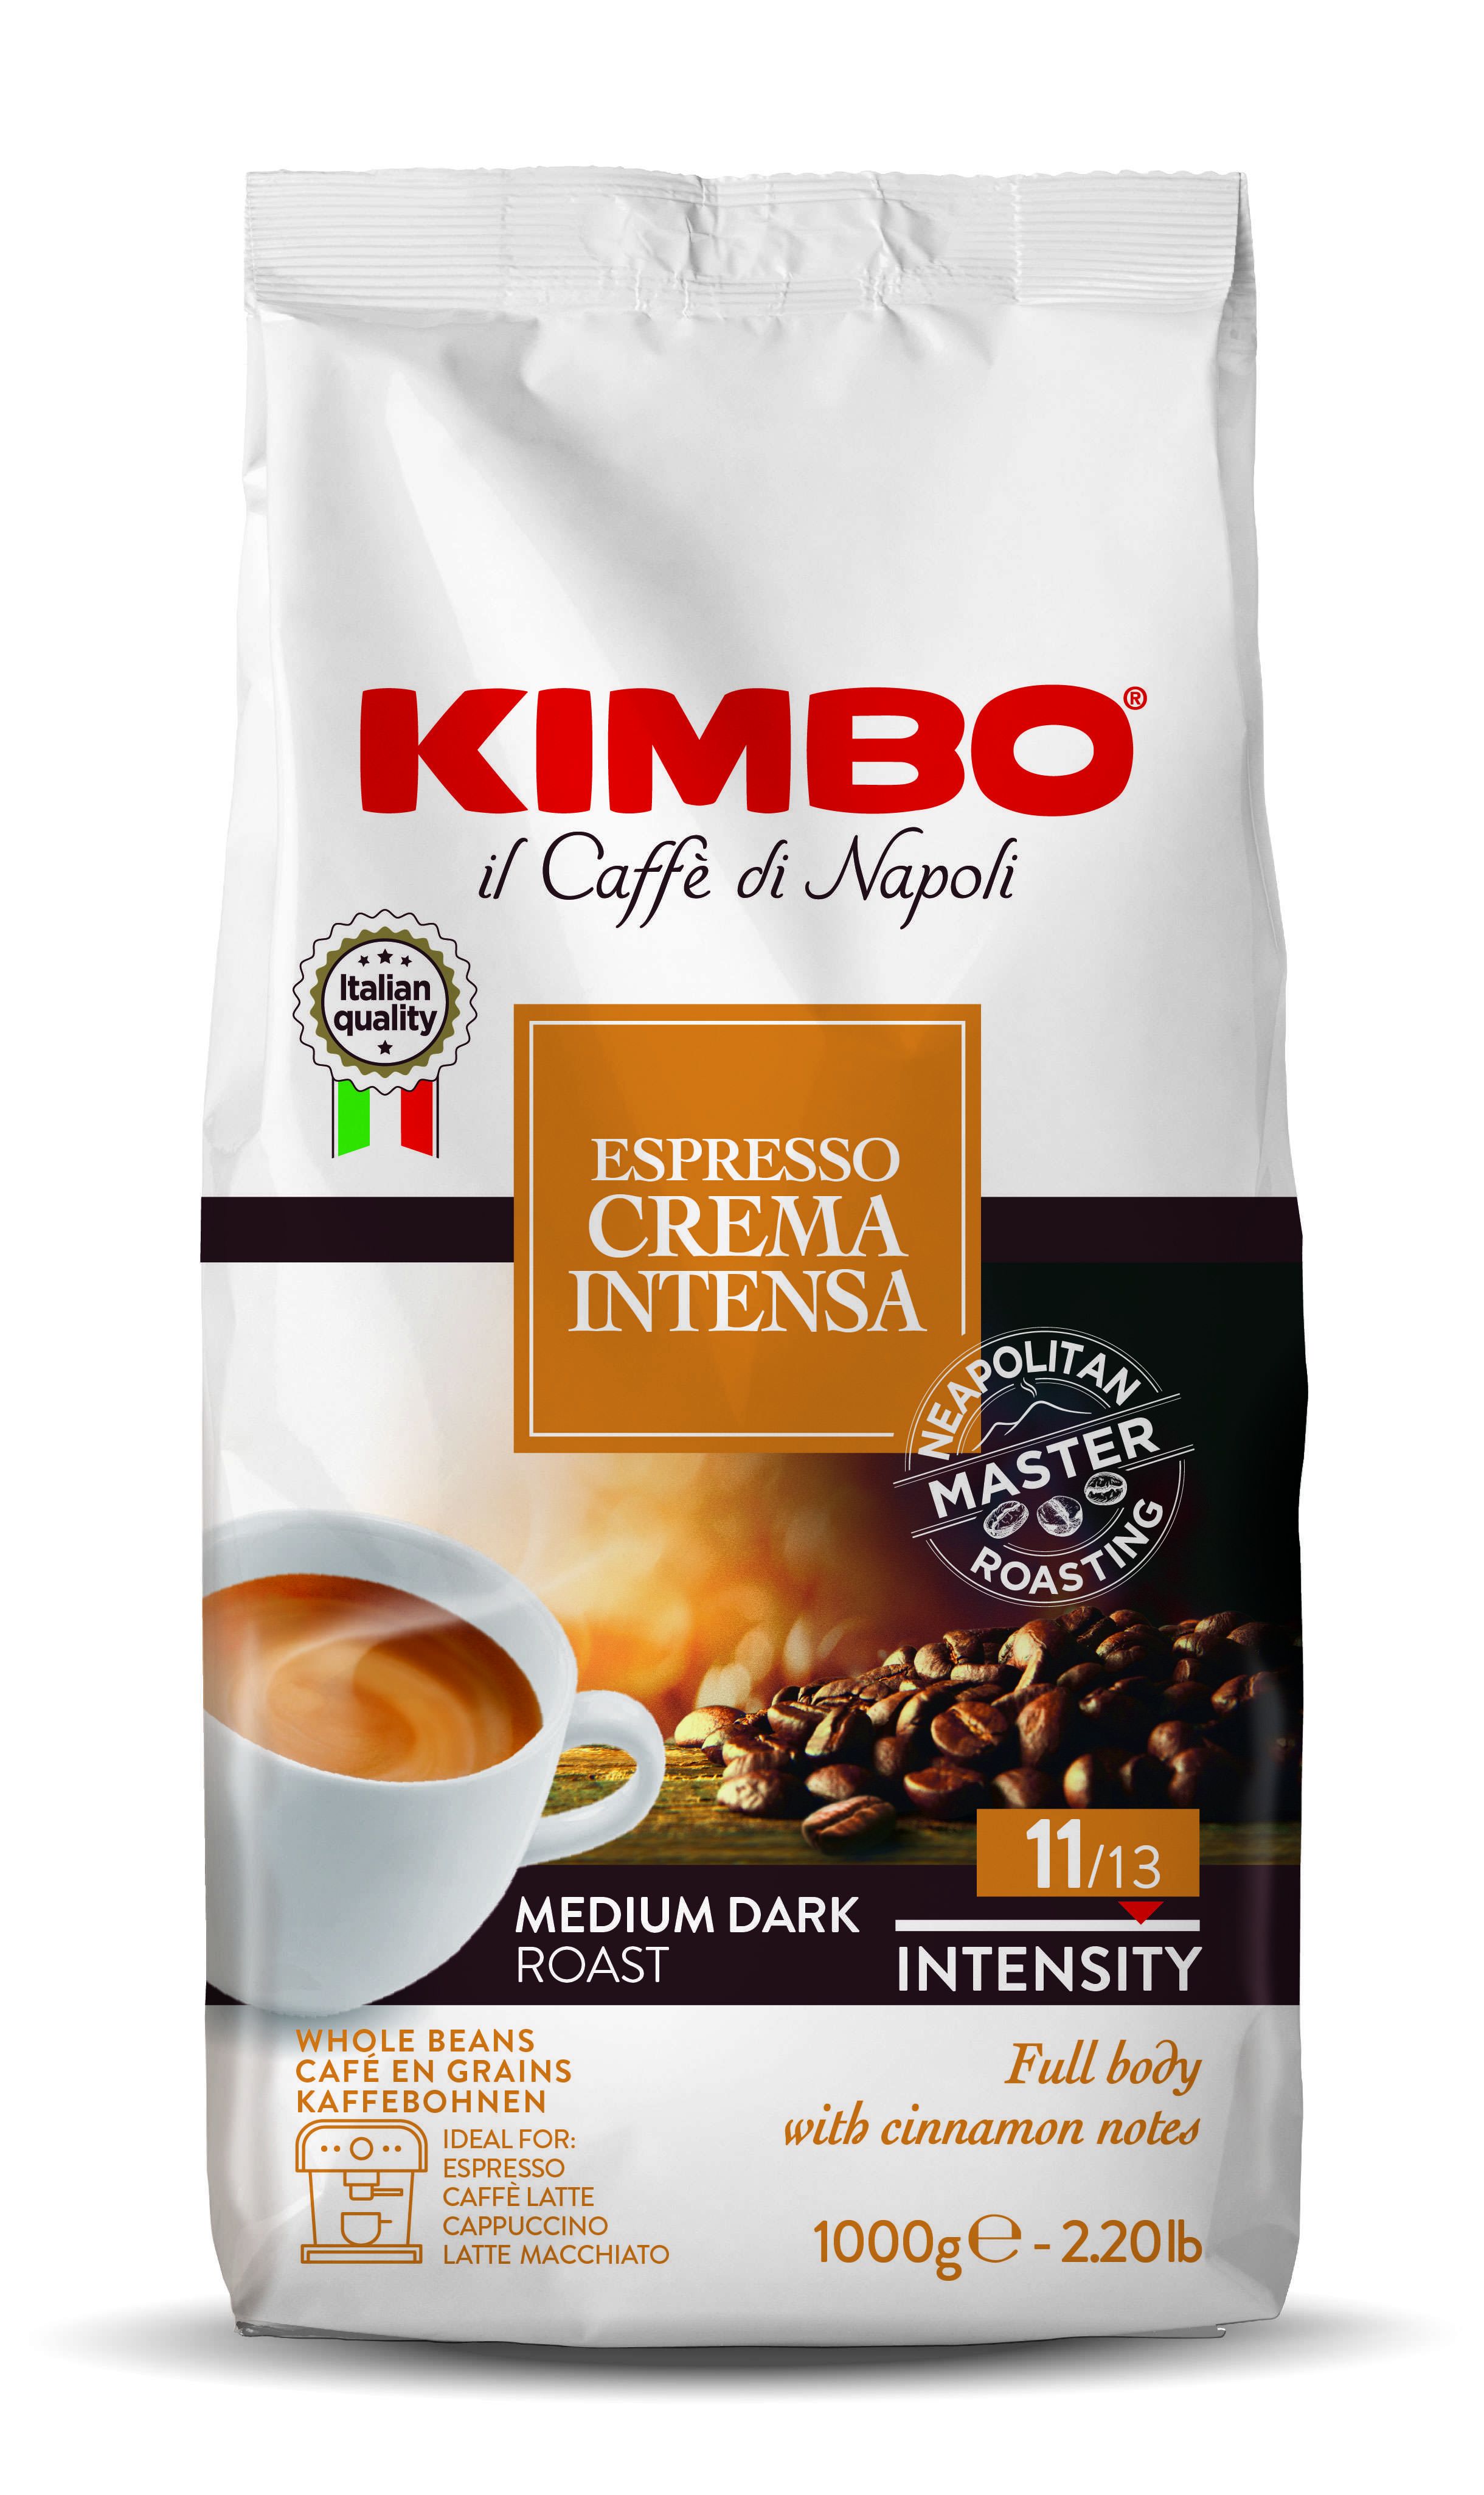 KIMBO S.p.A. Espresso Crema Intensa ganze Kaffeebohnen 1kg